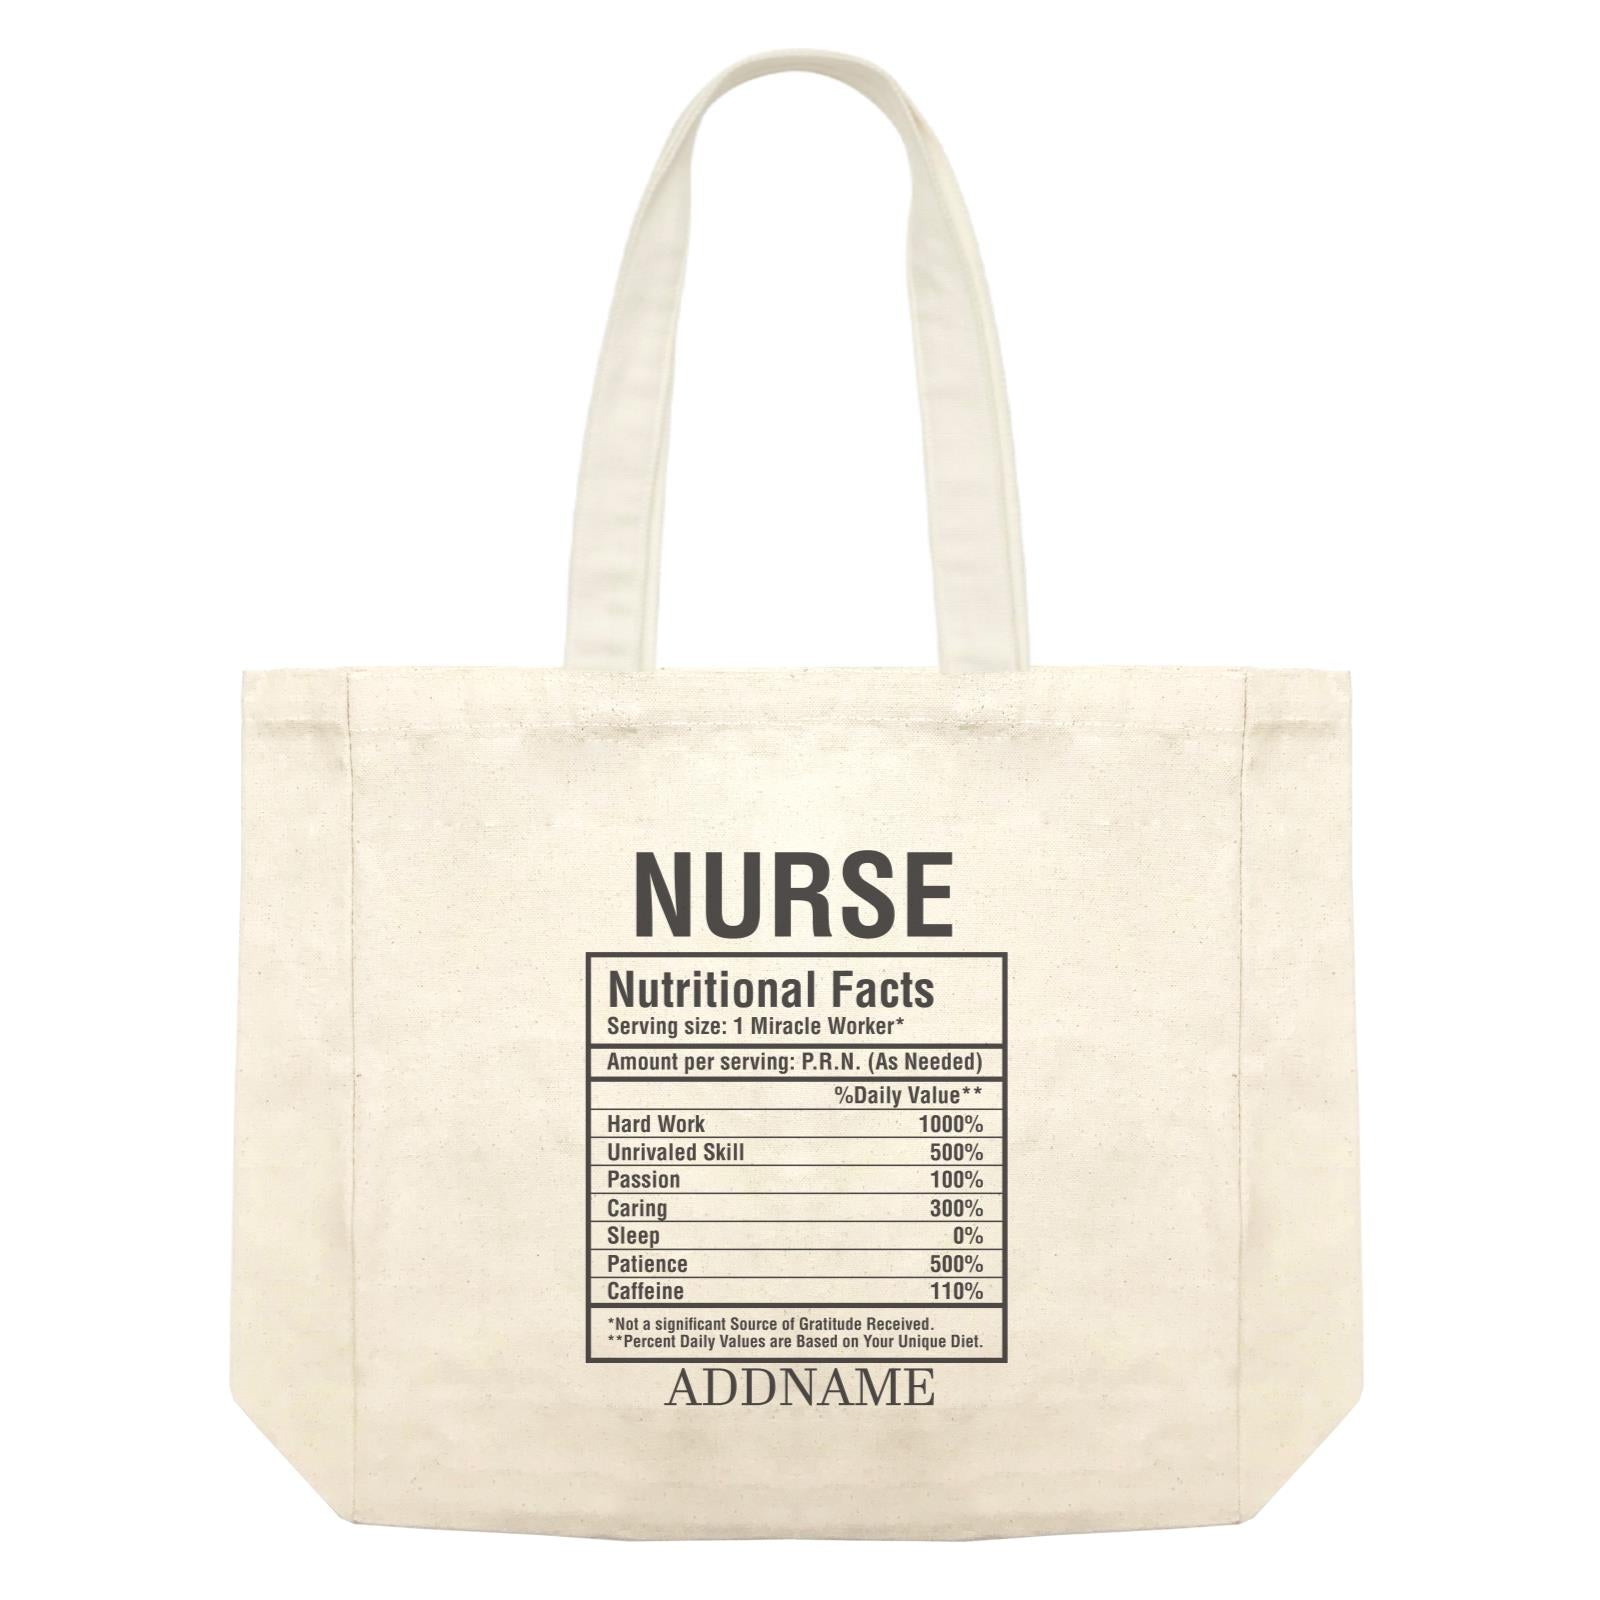 Nurse Nutritional Facts Shopping Bag